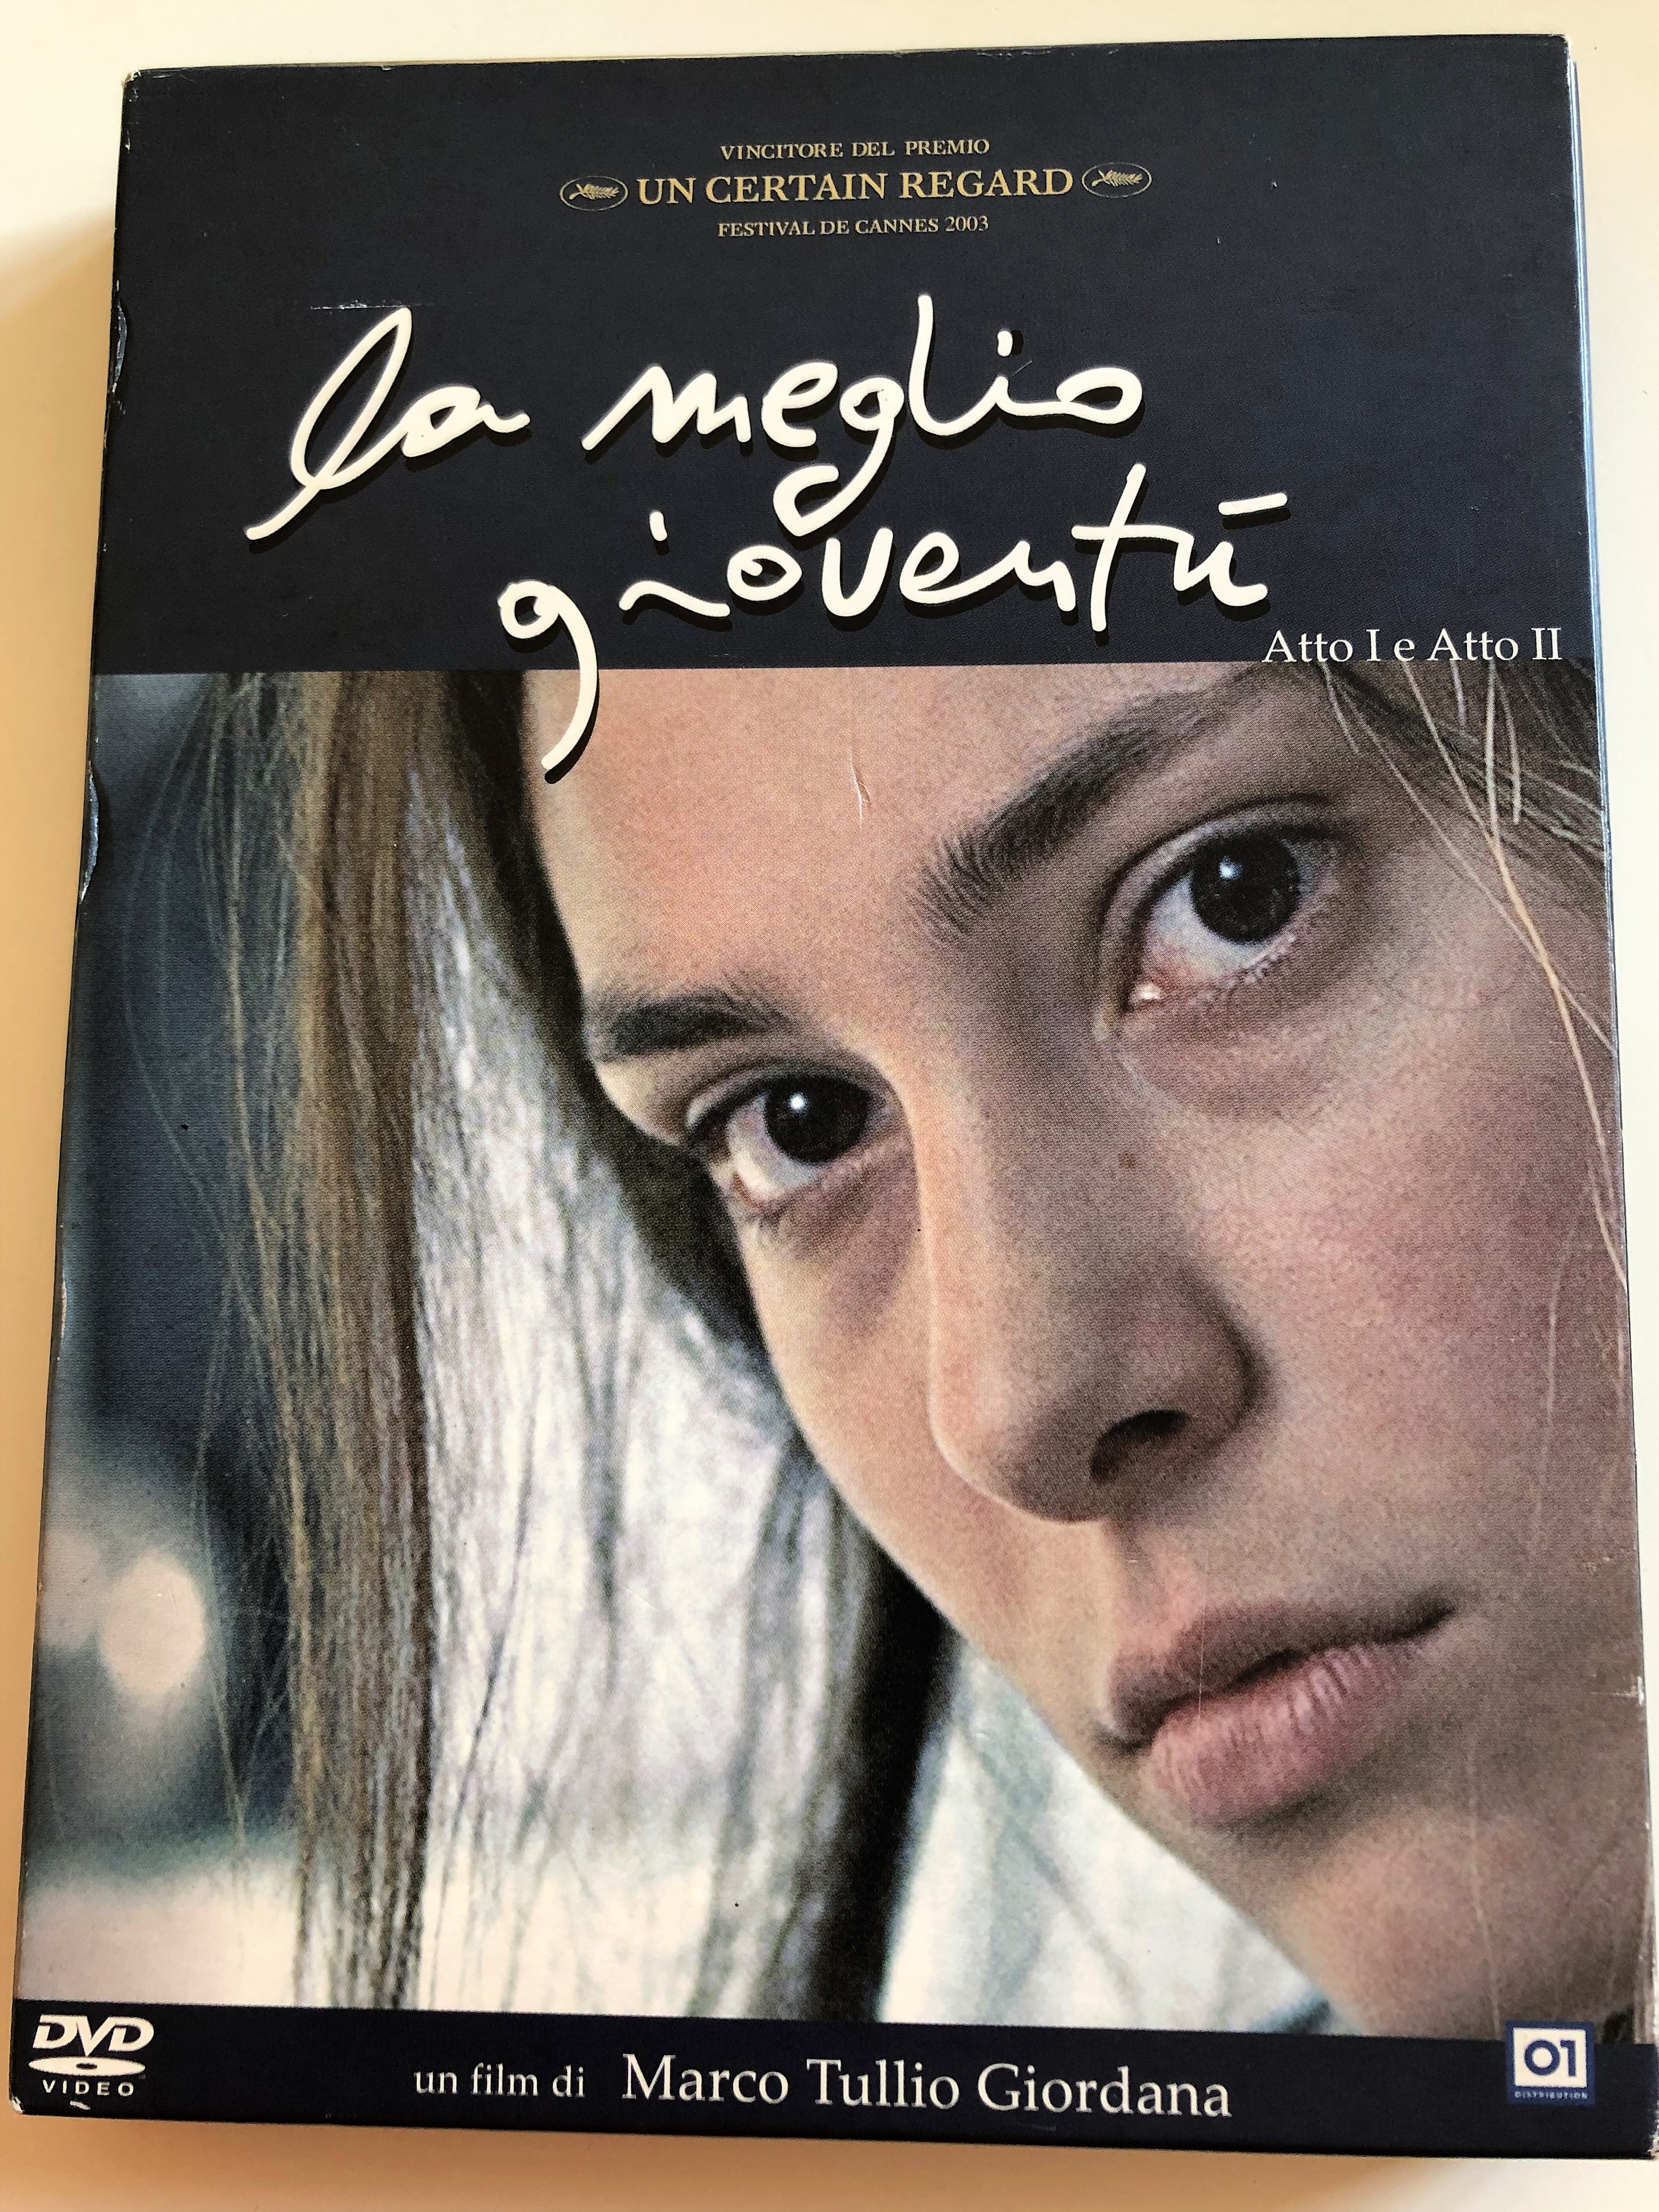 la-meglio-giovent-dvd-2005-the-best-of-youth-directed-by-marco-tullio-giordana-starring-alessio-boni-luigi-lo-cascio-jasmine-trinca-adriana-asti-1-.jpg